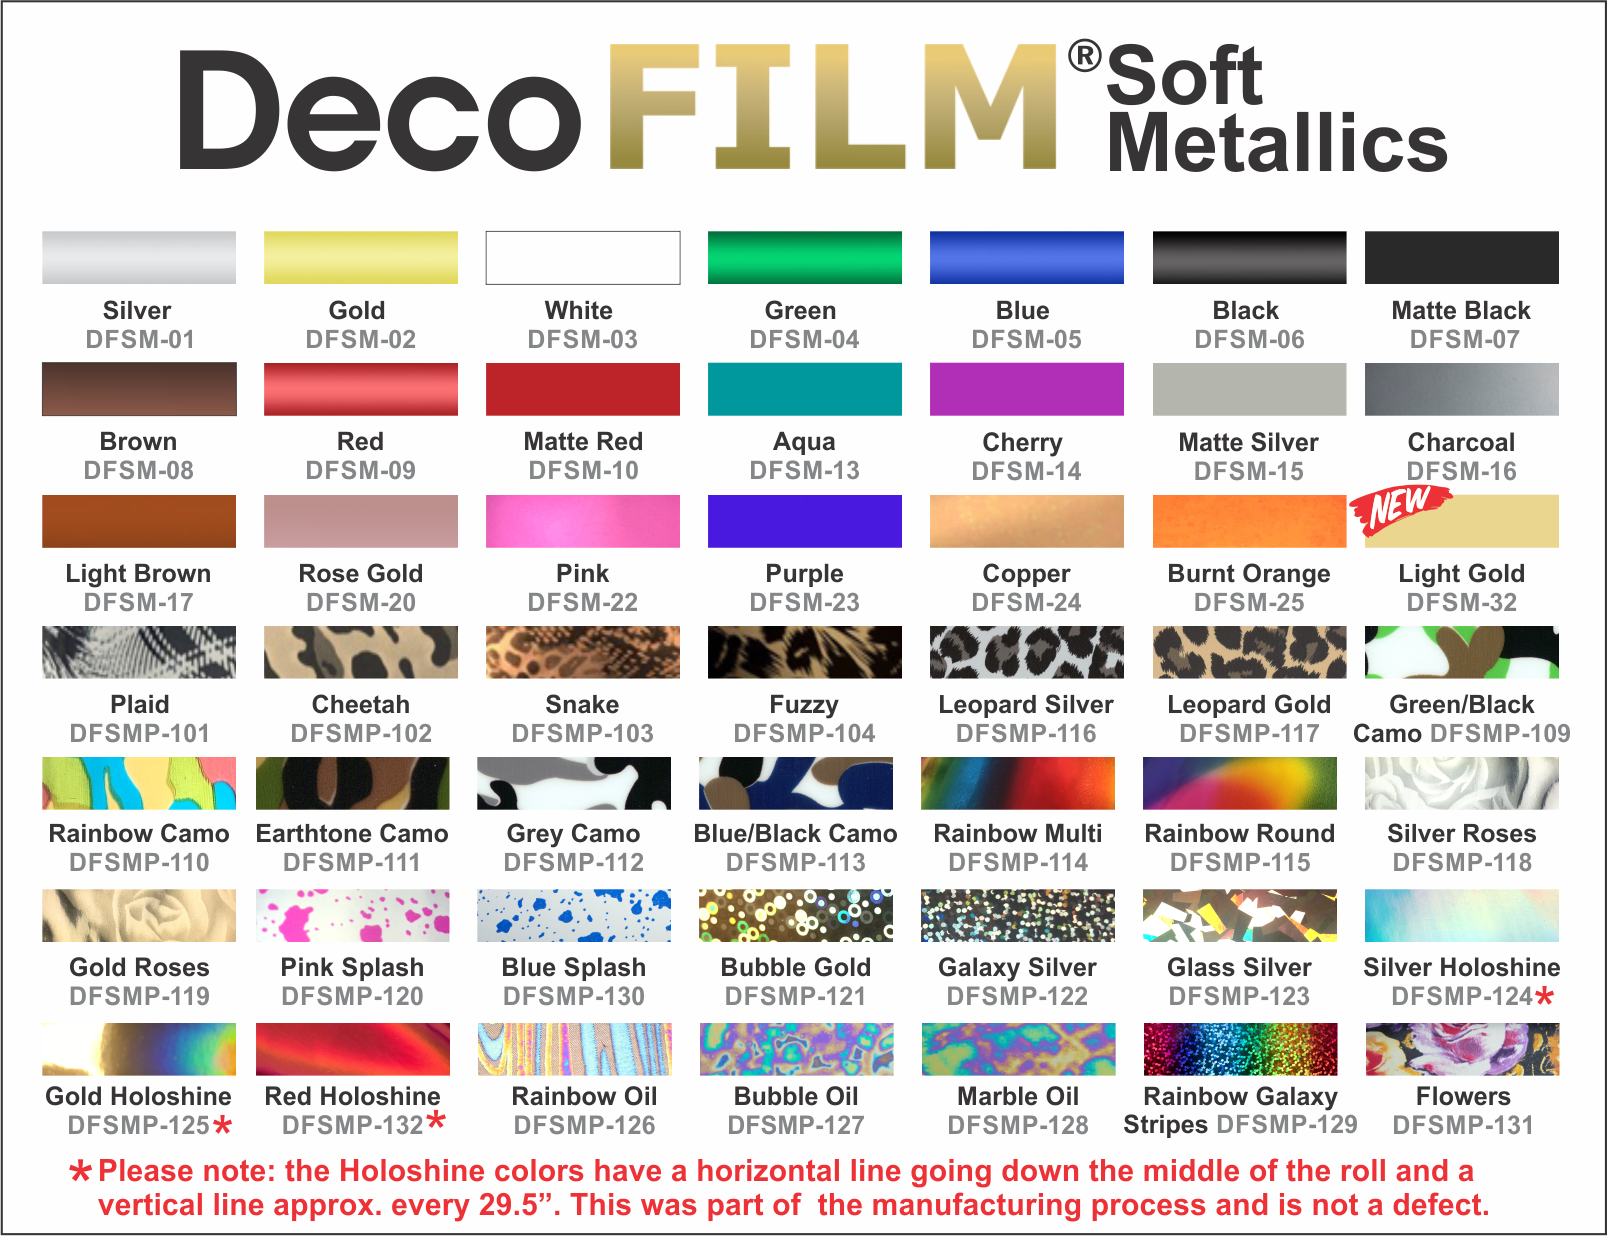 DecoFILM Soft Metallics